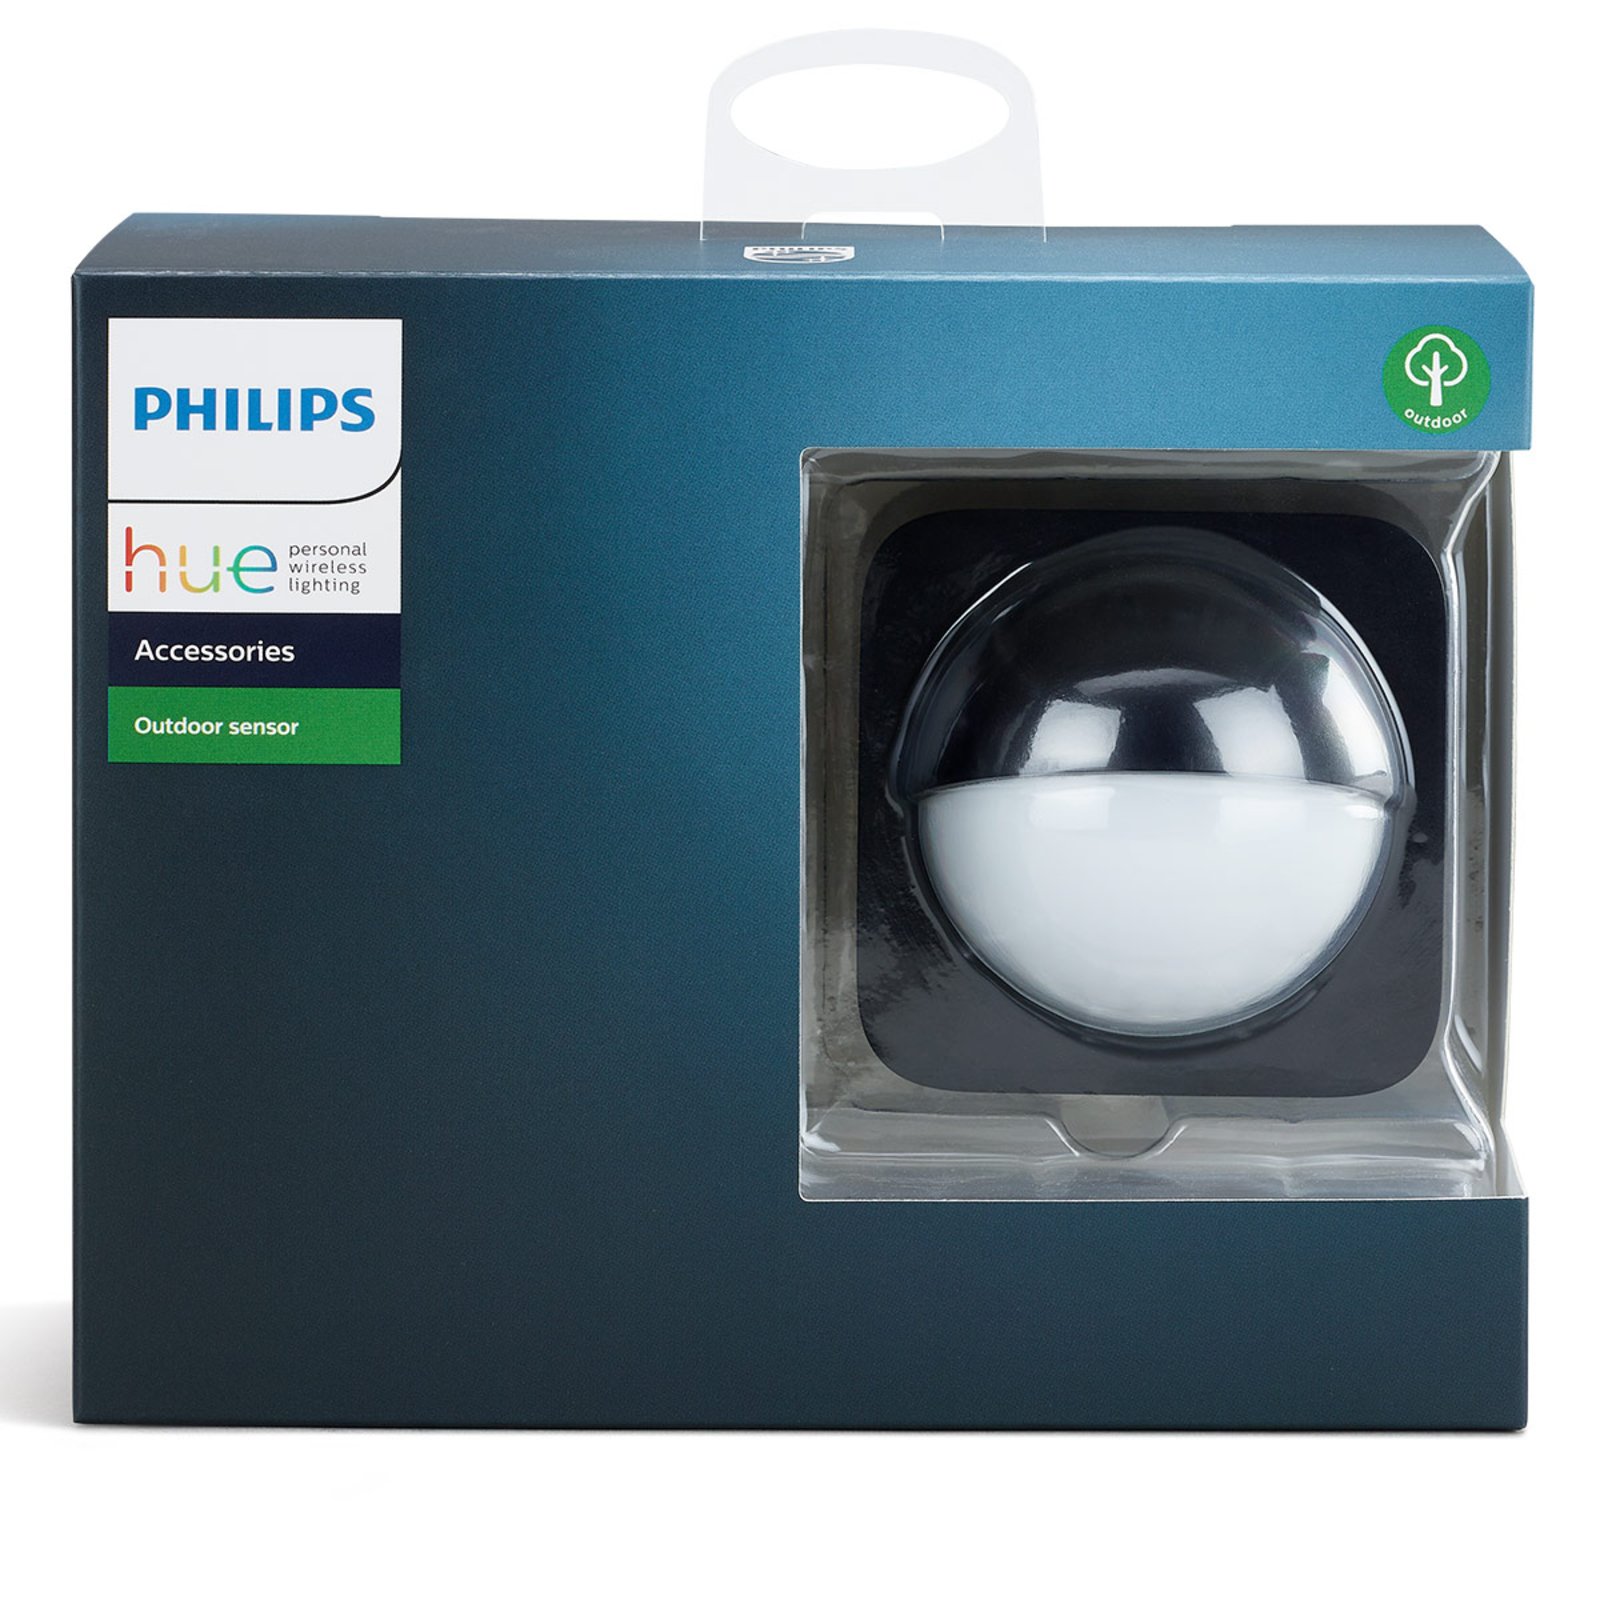 Philips Hue Outdoor Sensor - sensore di movimento